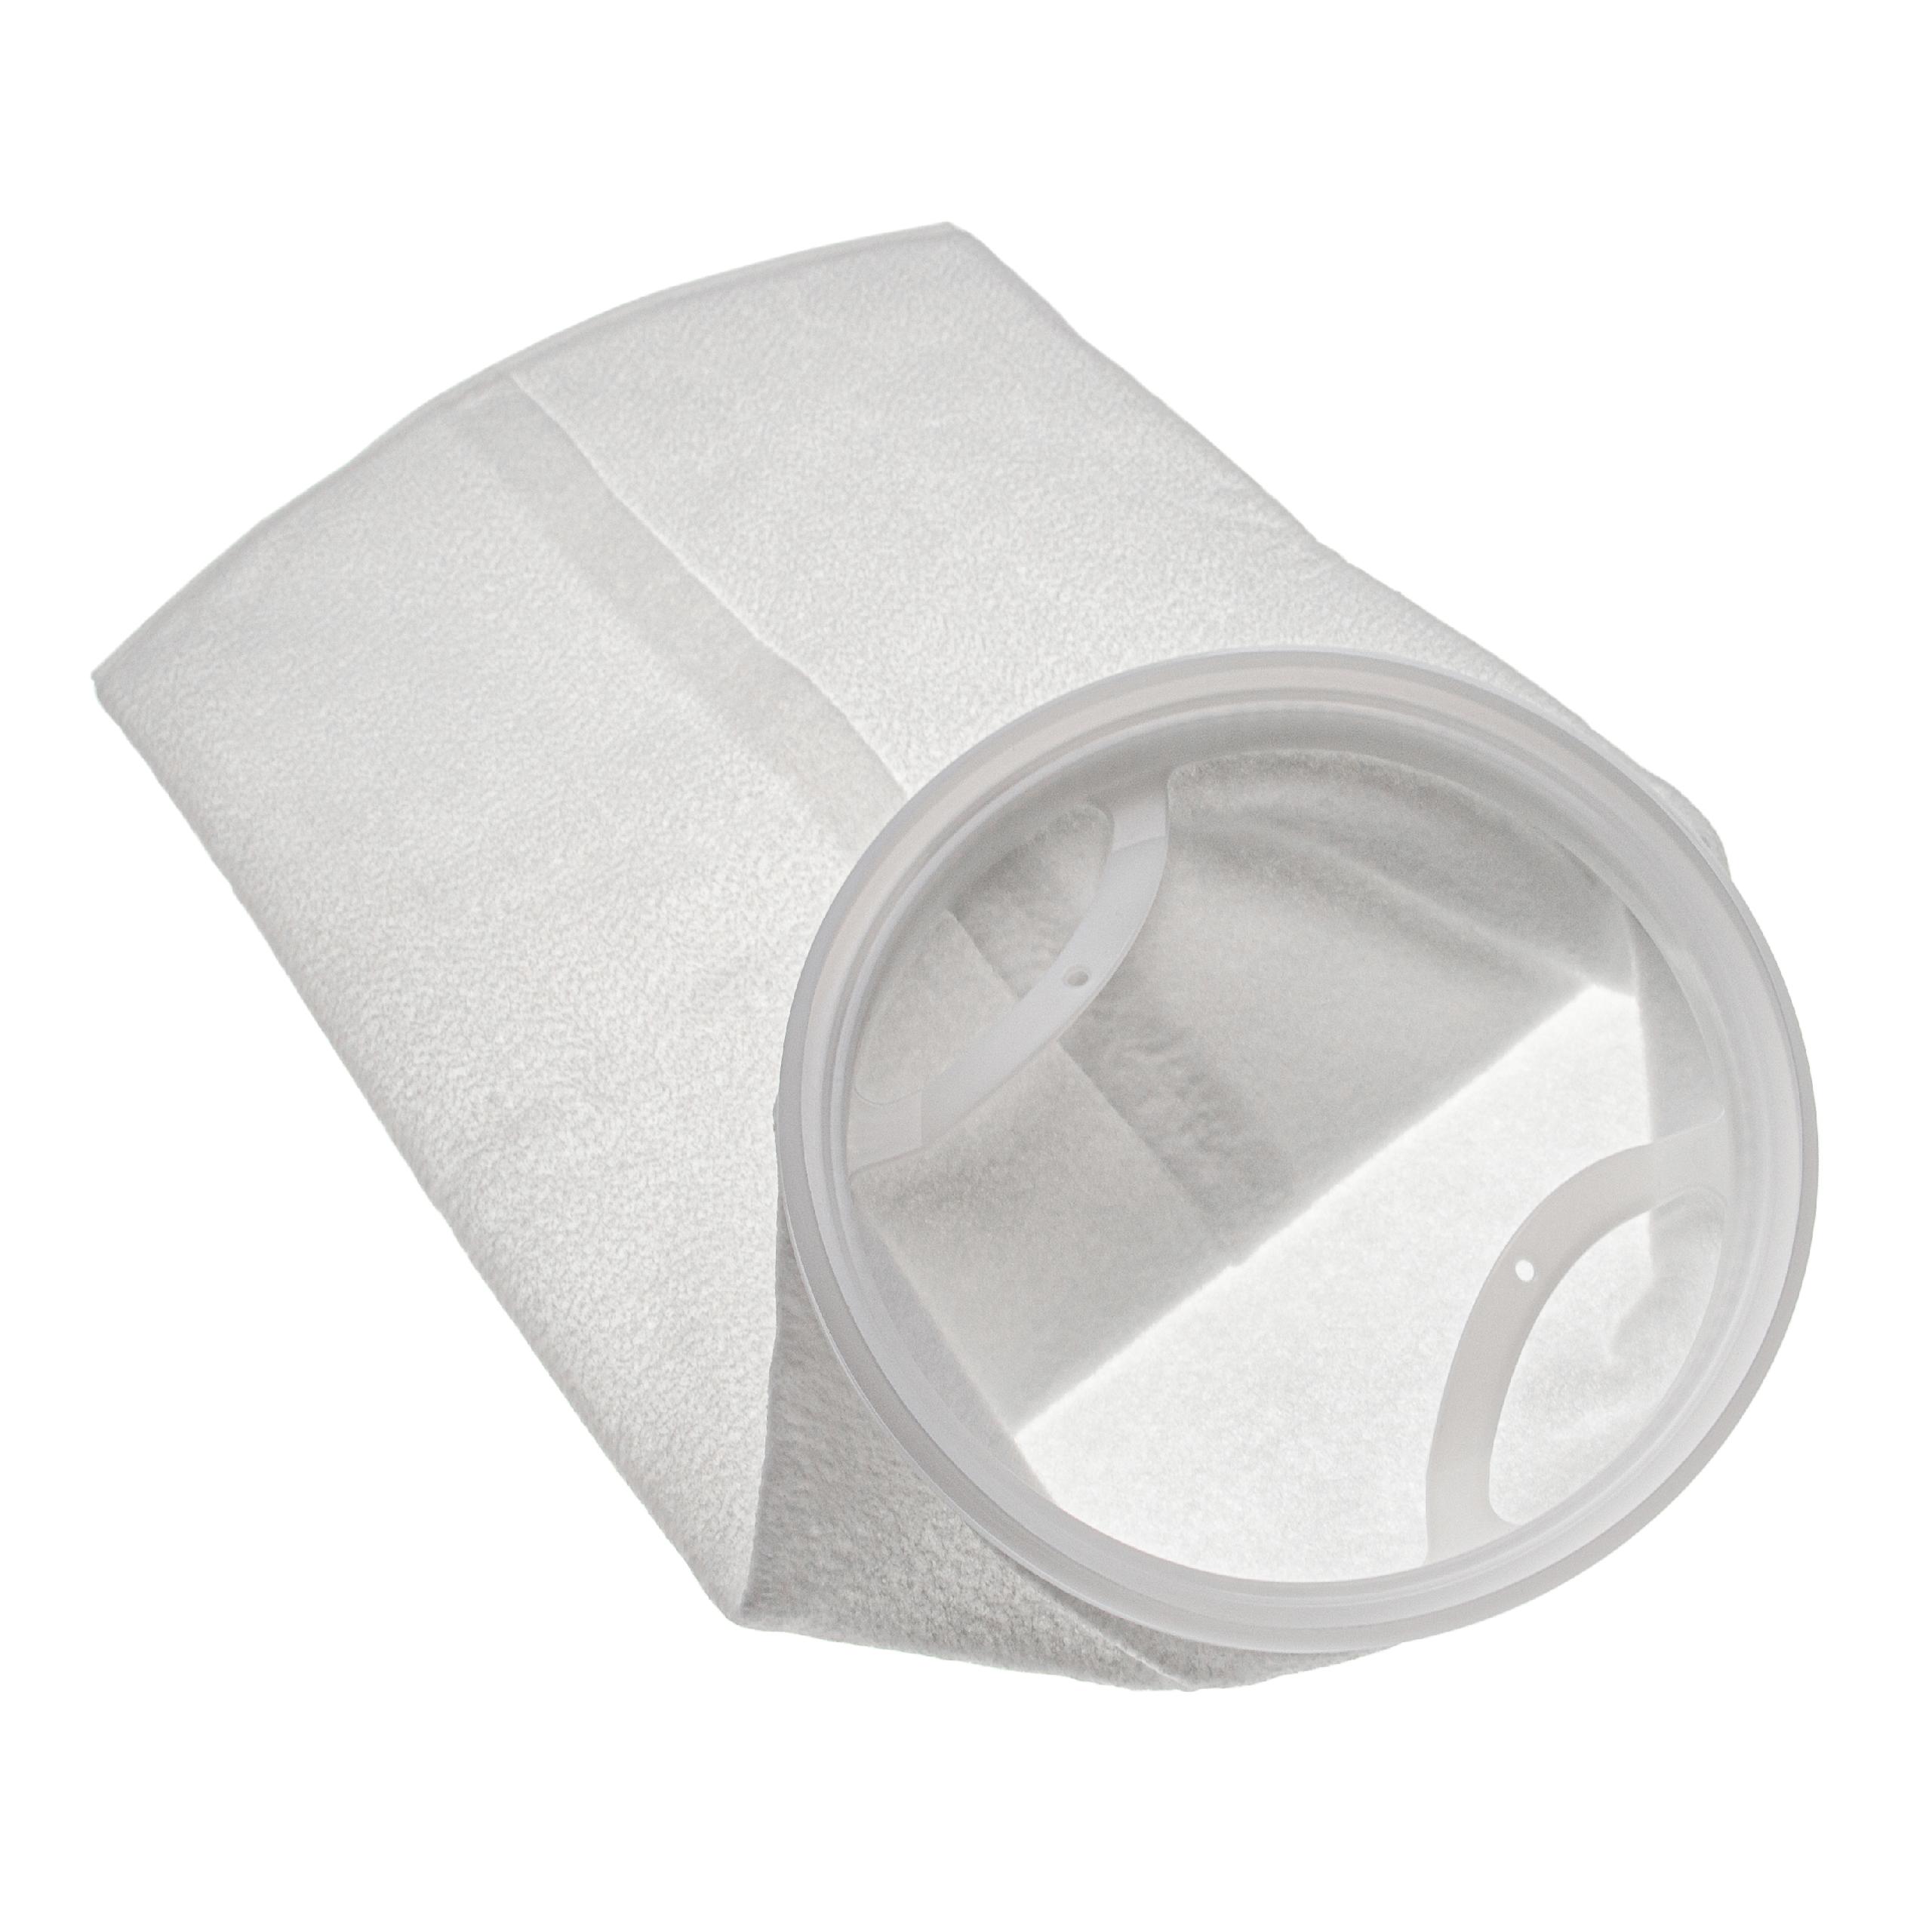 vhbw Universal Filter Sock for Aquariums, Pools, Skimmers - Filter Bag, Polyethylene, 18 x 45 cm, 100 micromet